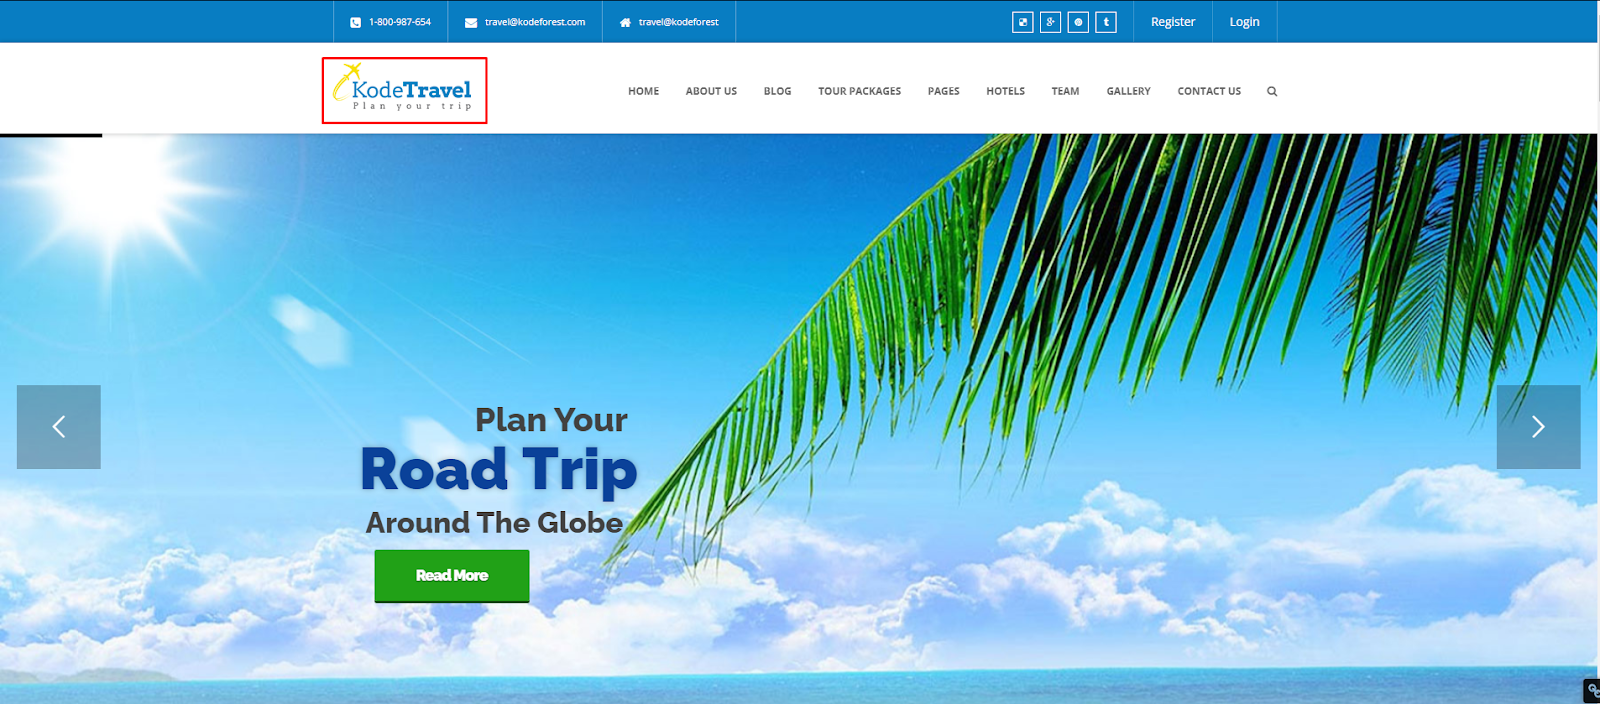 Kode Travel - Tourism and Travel WordPress Theme